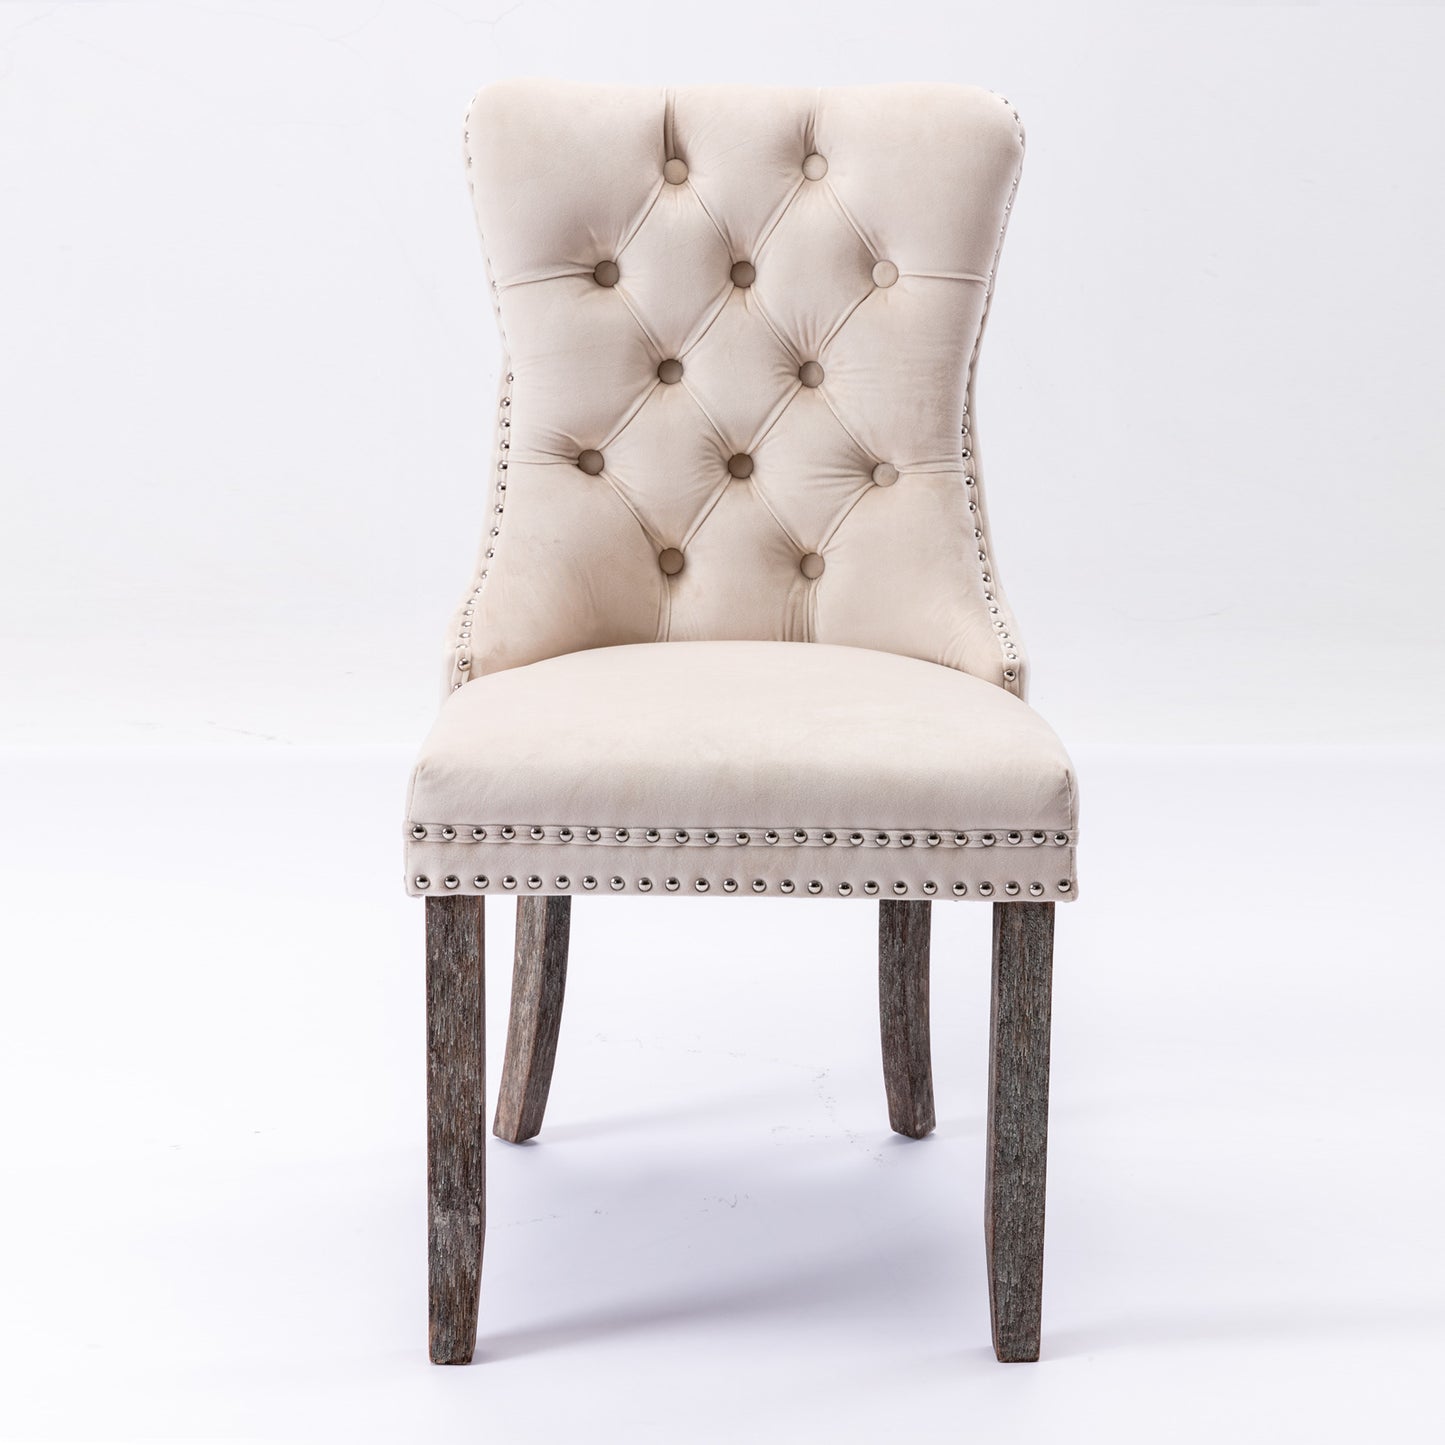 ACME Nikki Modern Beige High-end Tufted Solid Wood Contemporary Velvet Upholstered Dining Chair 2 Pcs Set